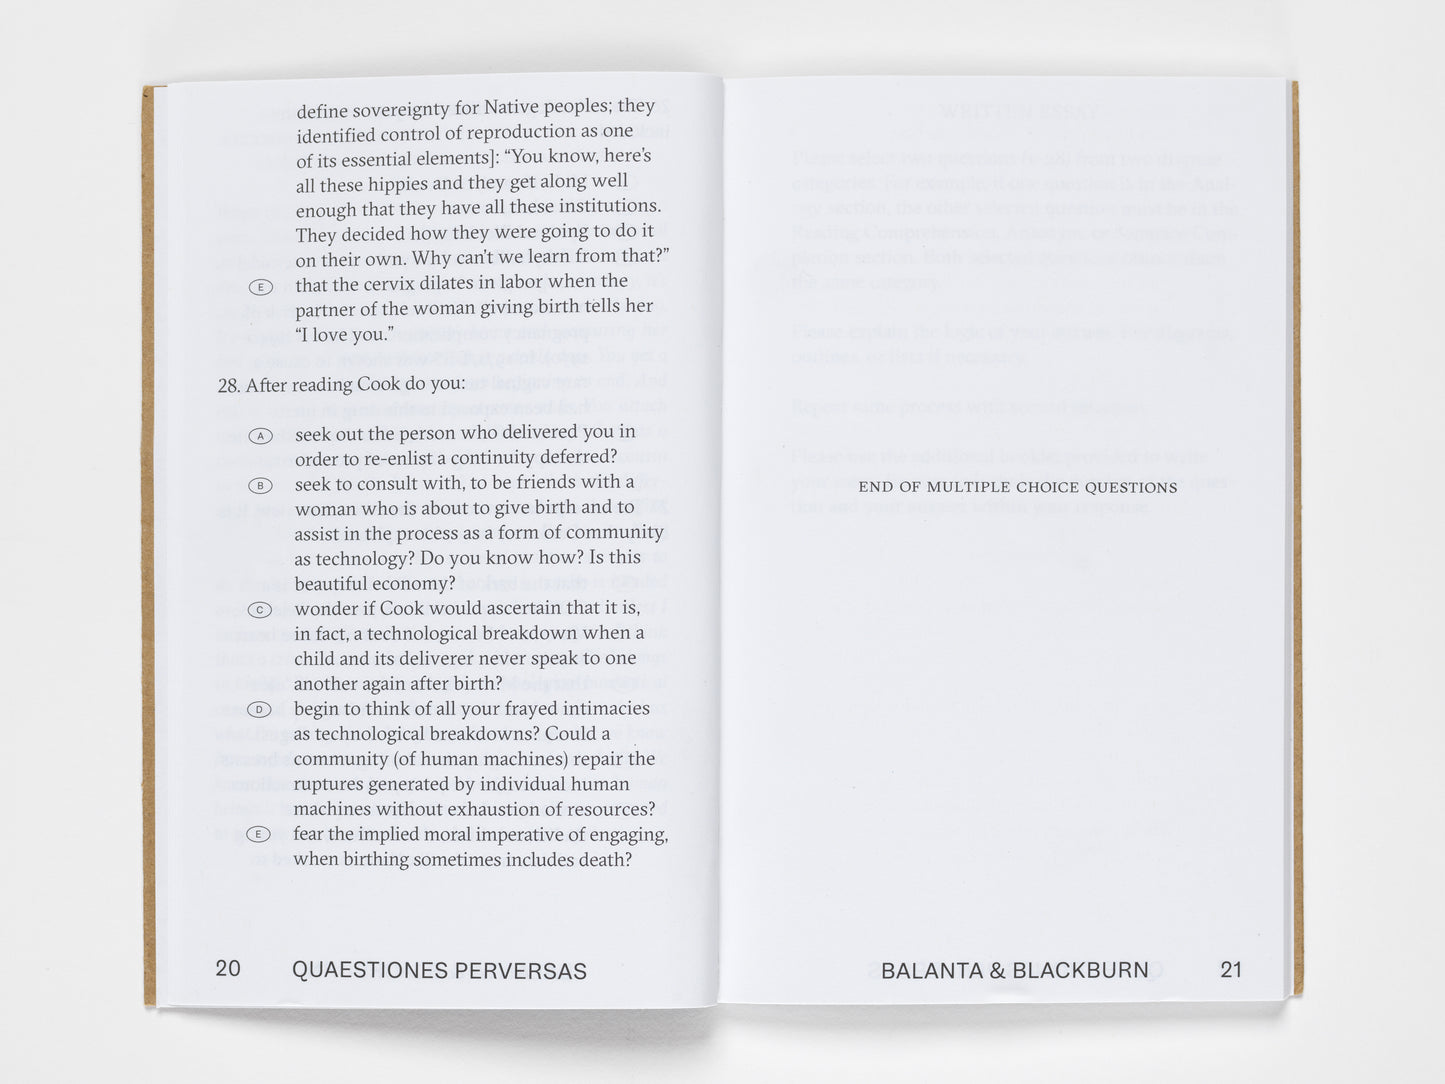 Beatriz E. Balanta & Mary Walling Blackburn: Quaestiones Perversas